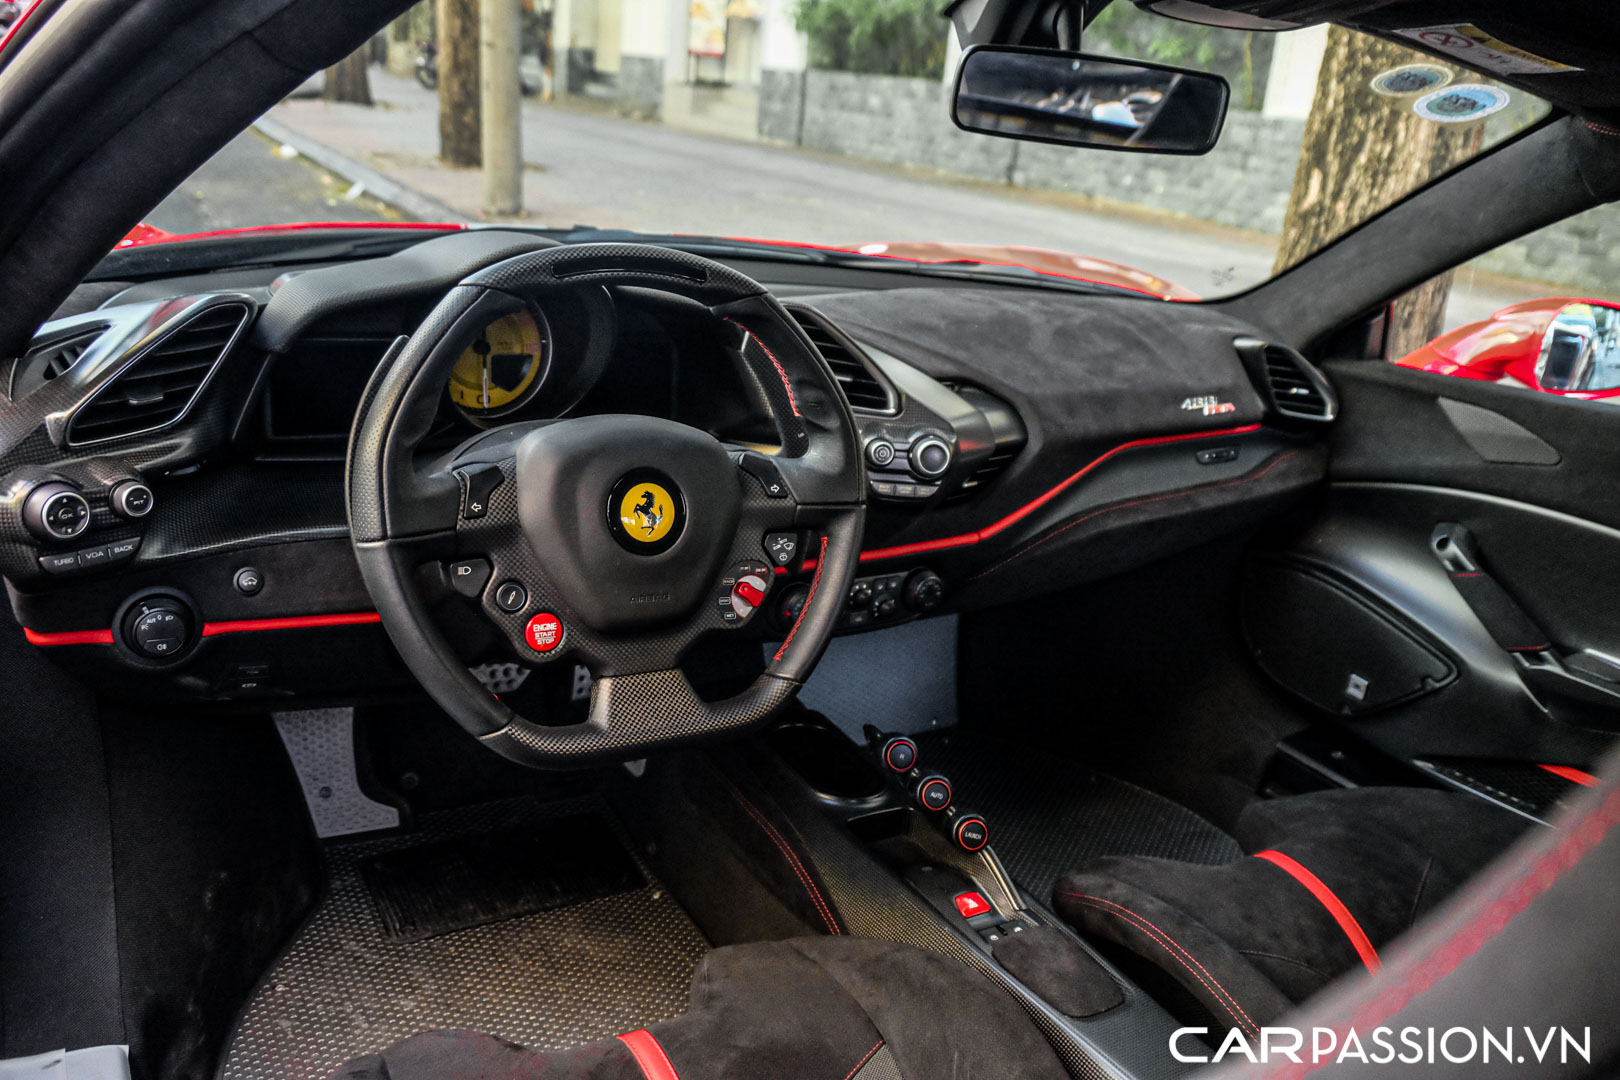 CP-Ferrari 488 Pista độc nhất Việt Nam14.jpg